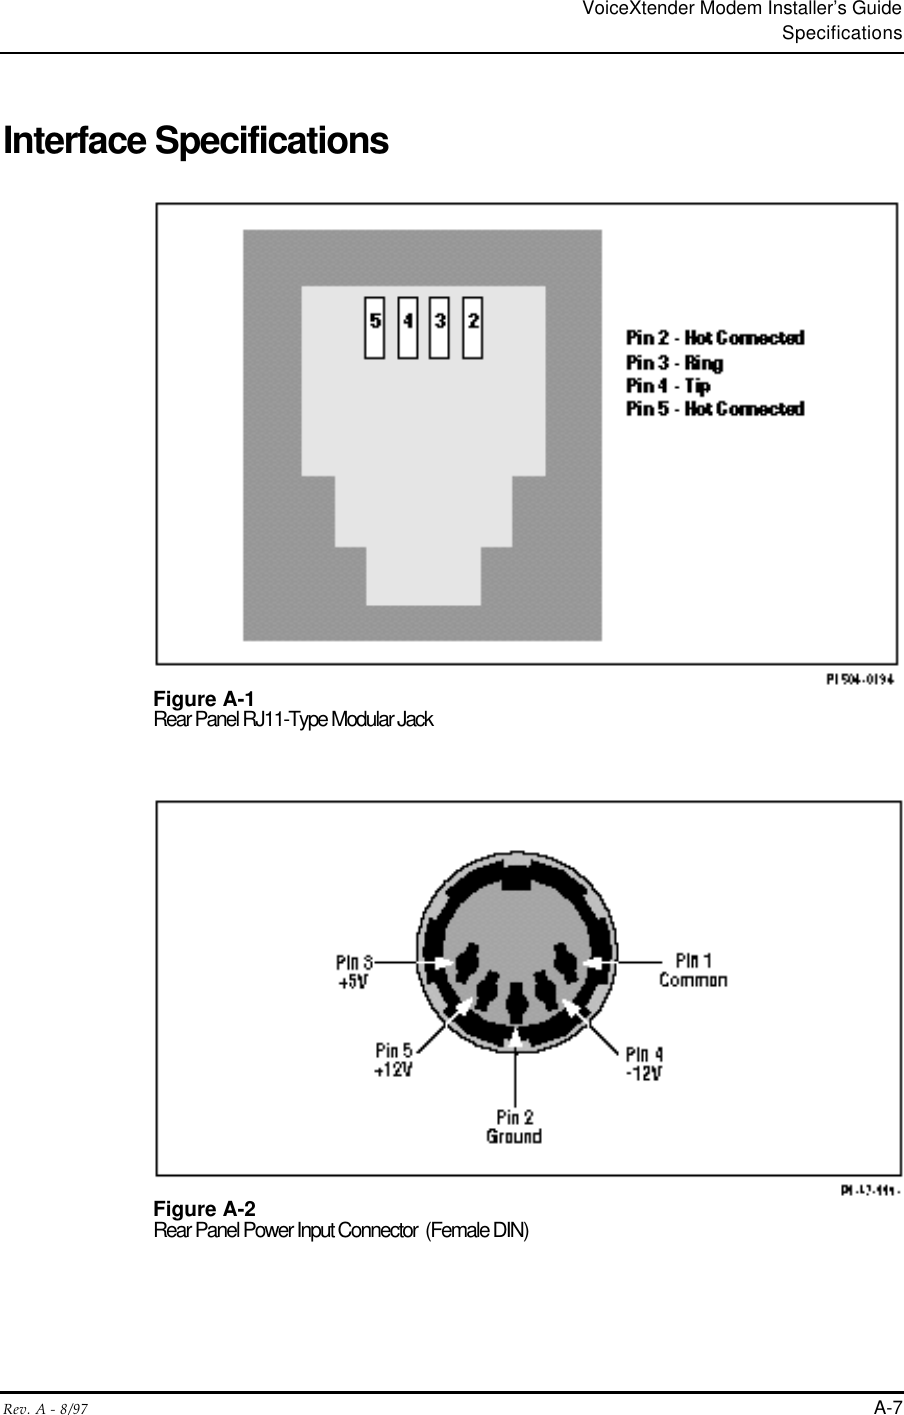 VoiceXtender Modem Installer’s GuideSpecificationsRev. A - 8/97 A-7Interface SpecificationsFigure A-1Rear Panel RJ11-Type Modular JackFigure A-2Rear Panel Power Input Connector  (Female DIN)